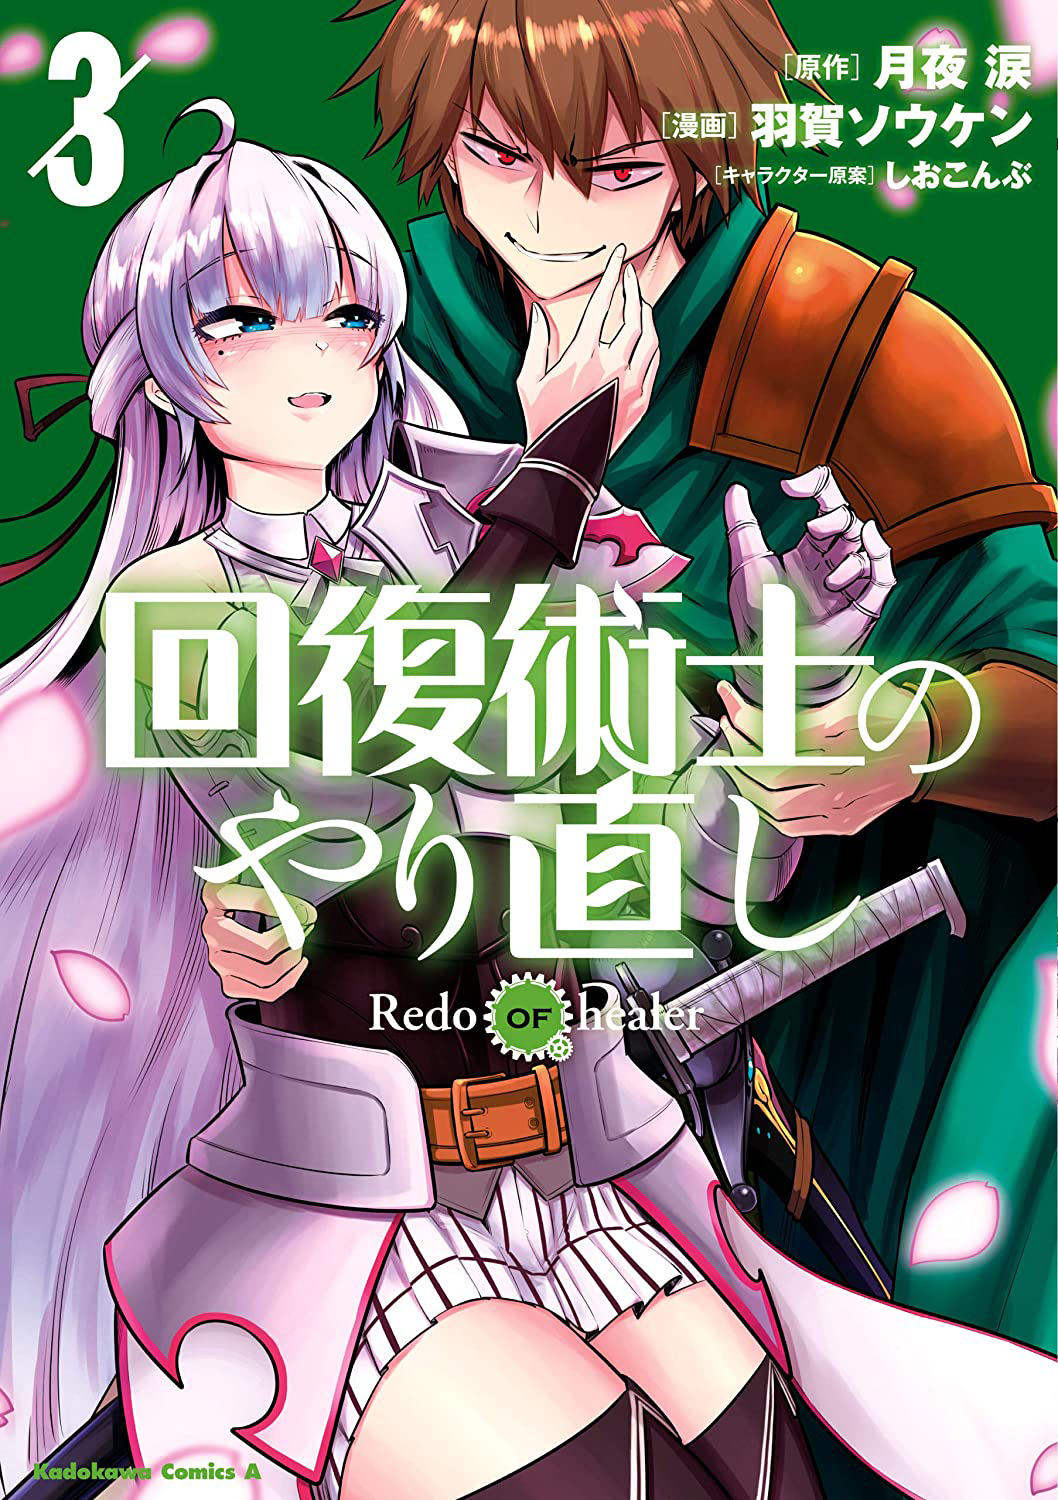 Kaiyari Redo of Healer (Kaifuku Jutsushi no Yarinaoshi) Anime Fabric Wall  Scroll Poster (16x23) Inches [A] Kaiyari Redo of Healer-3